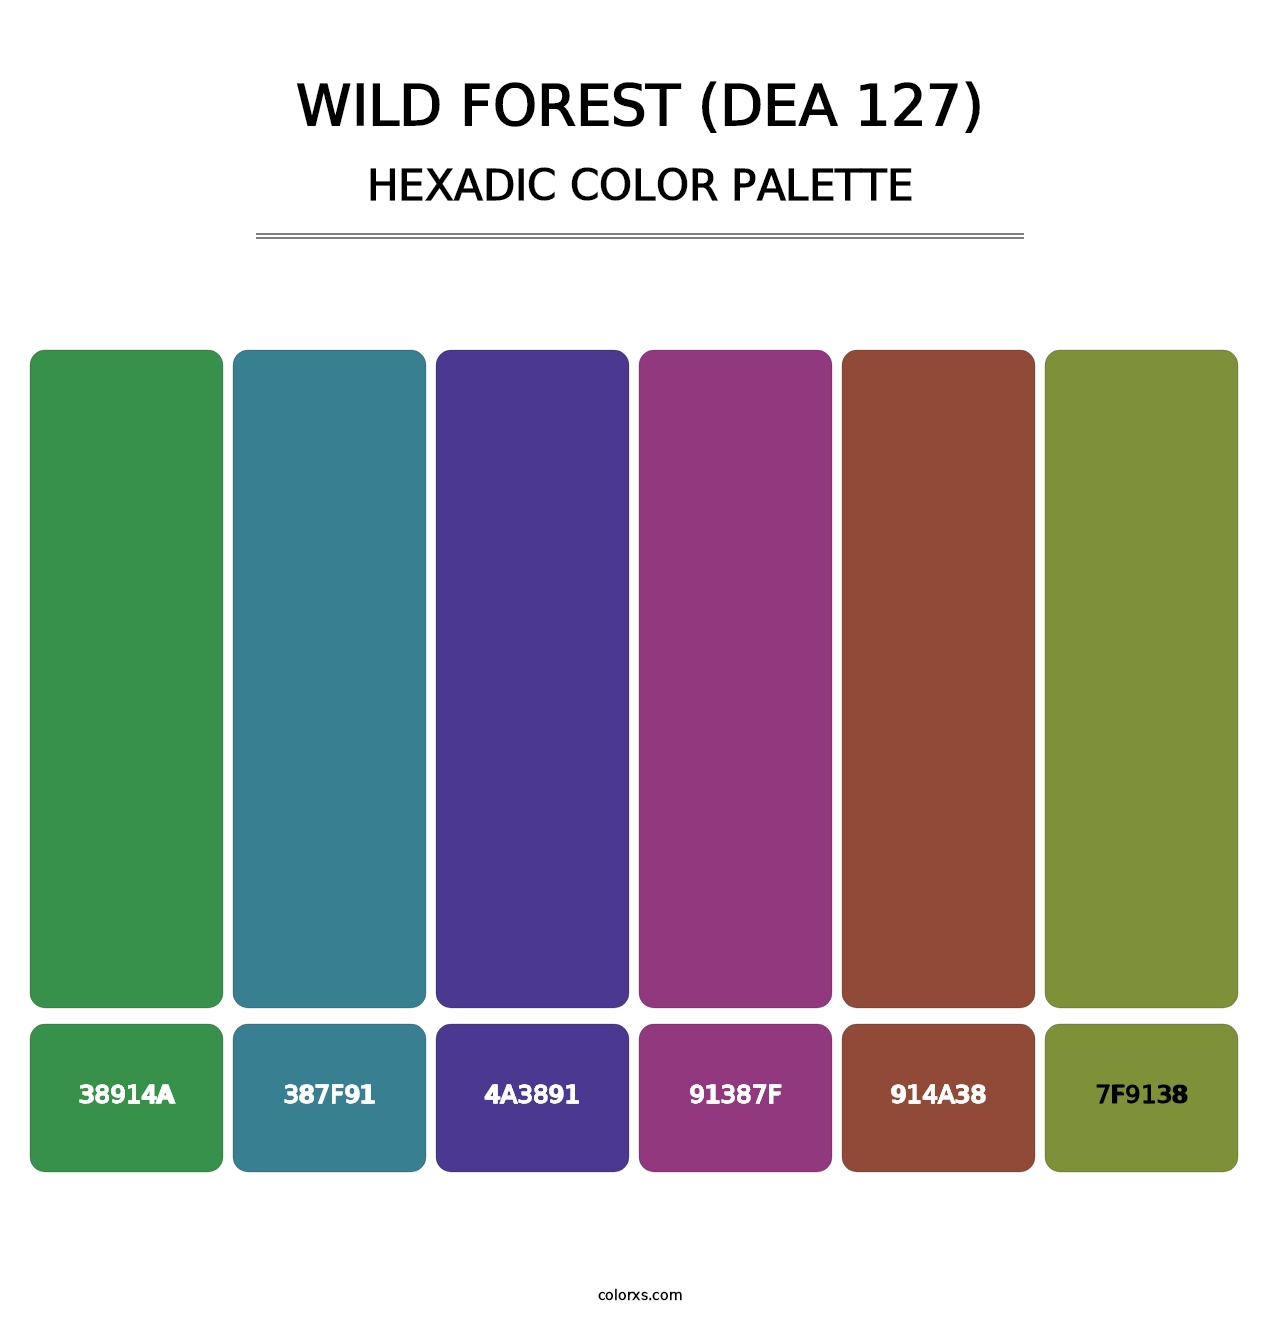 Wild Forest (DEA 127) - Hexadic Color Palette